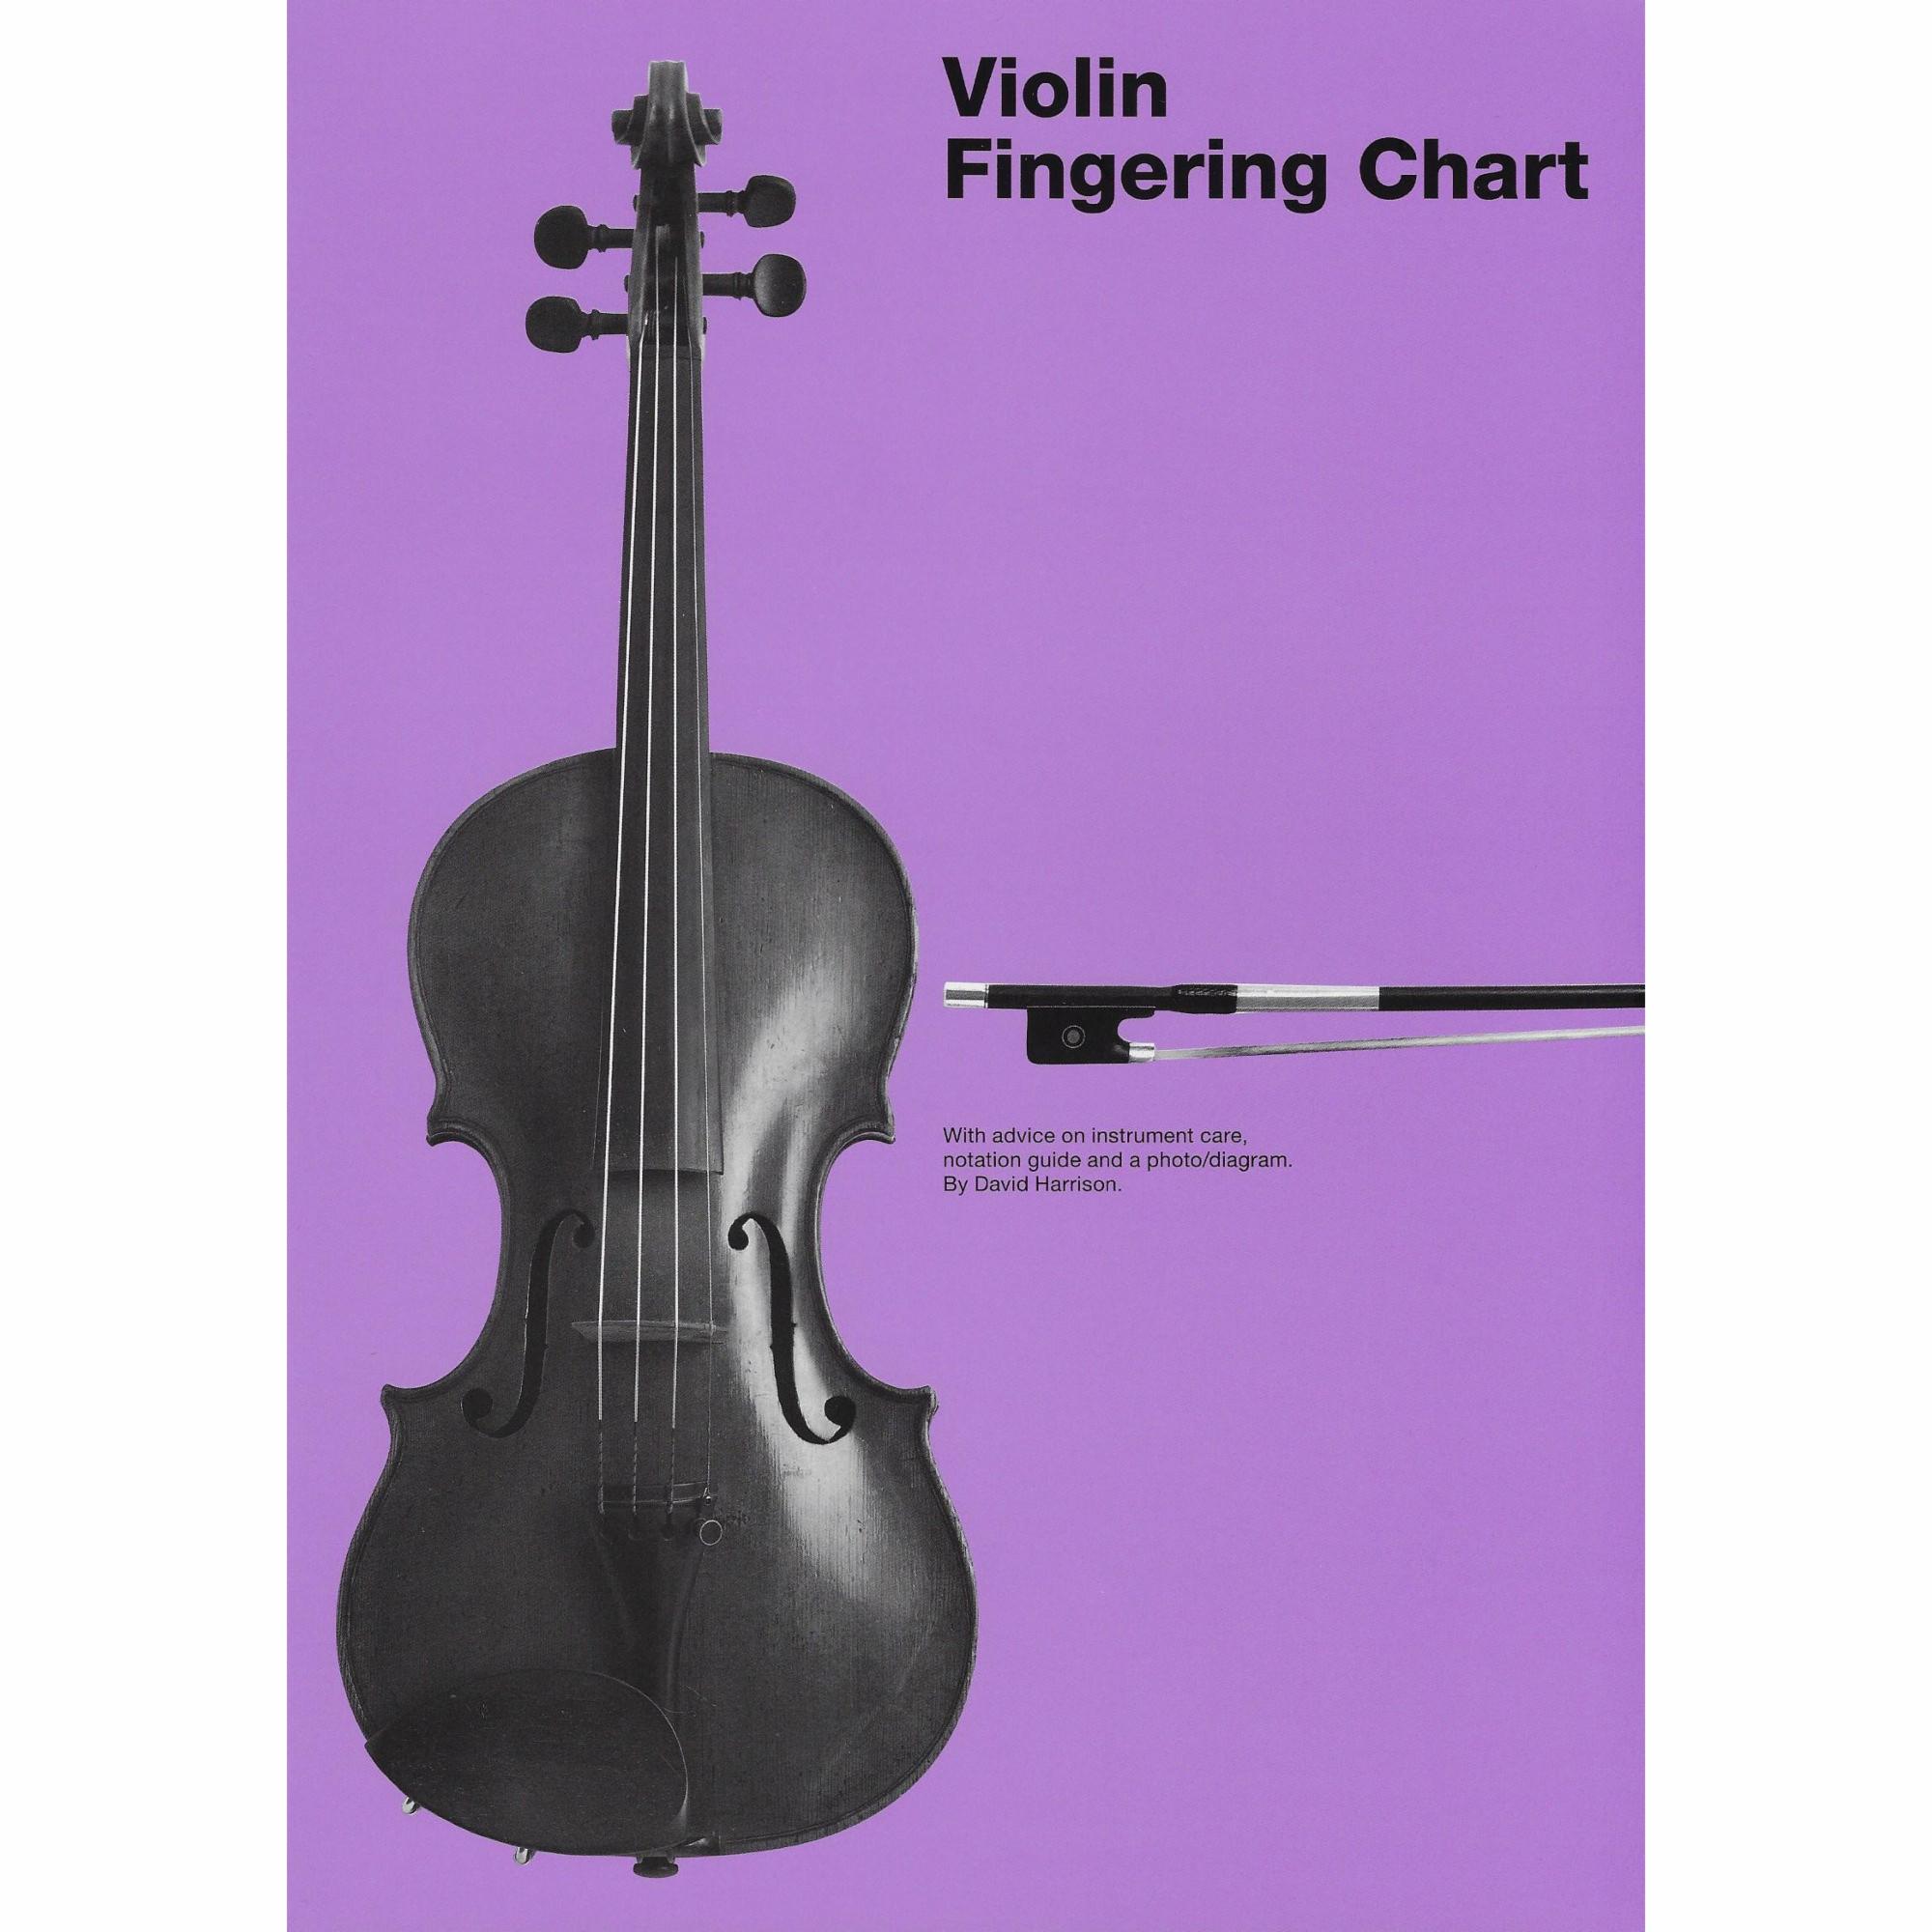 Fingering Charts for Violin or Cello